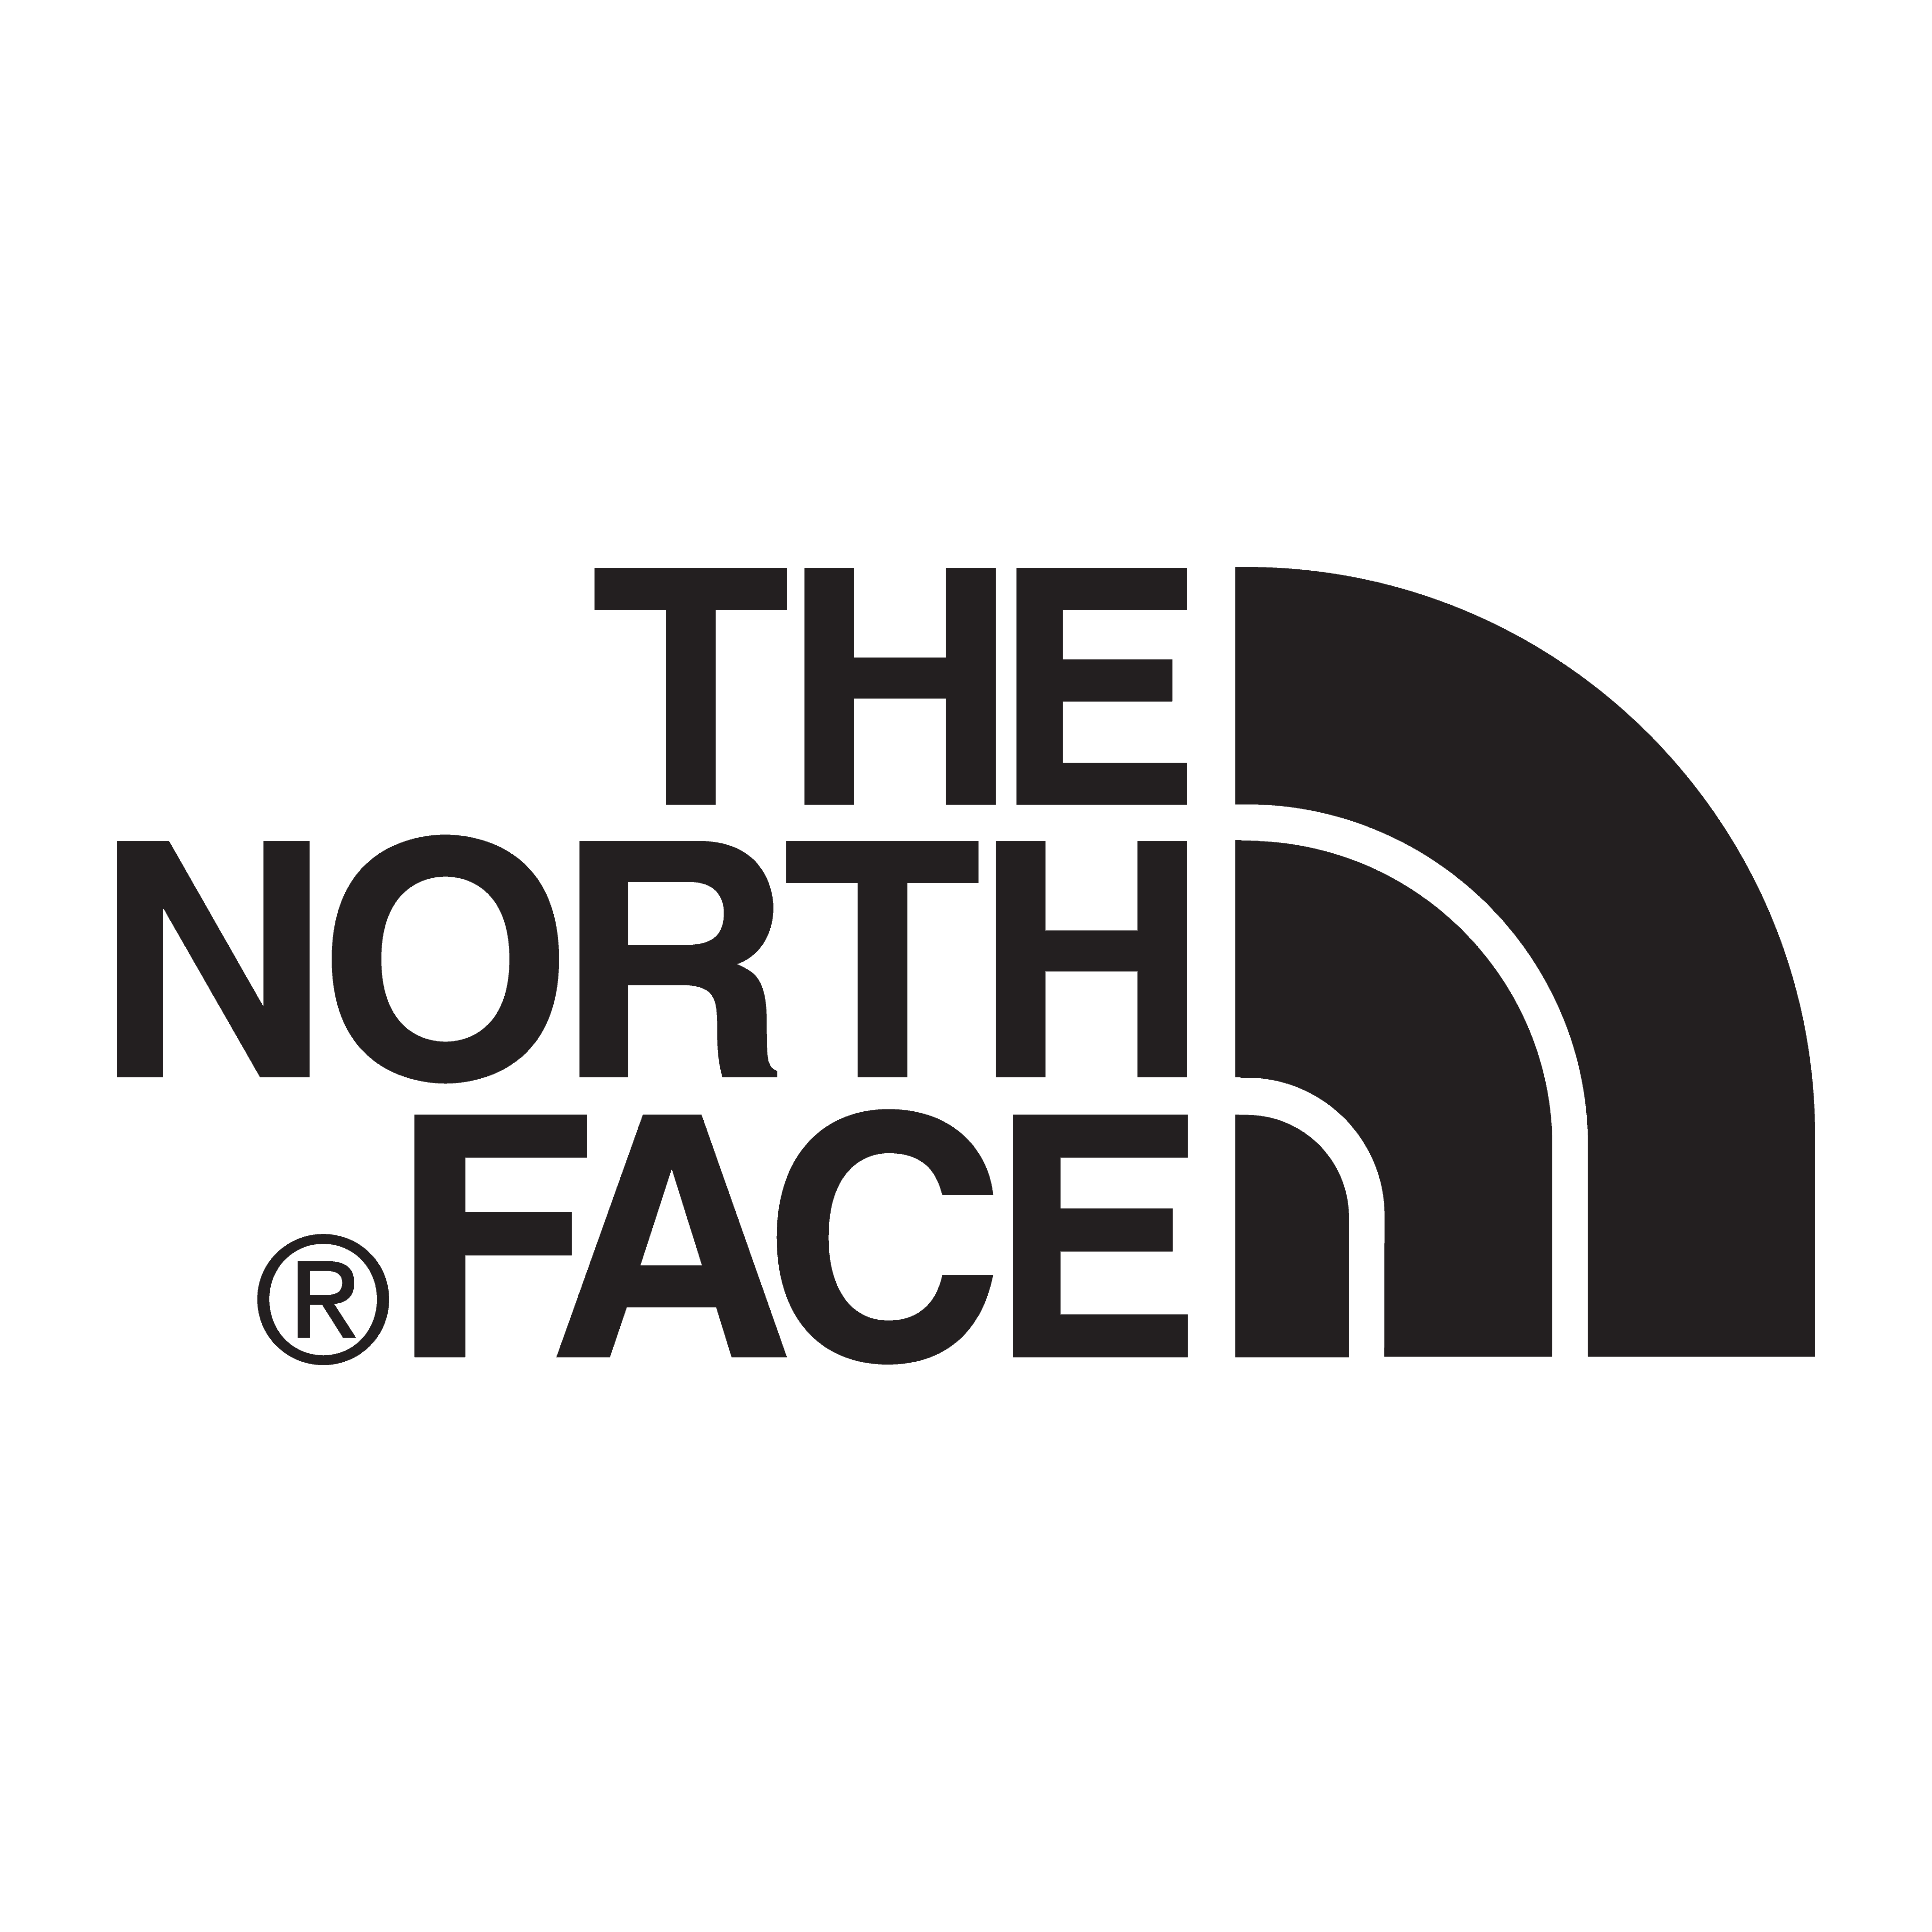 brasão the north face